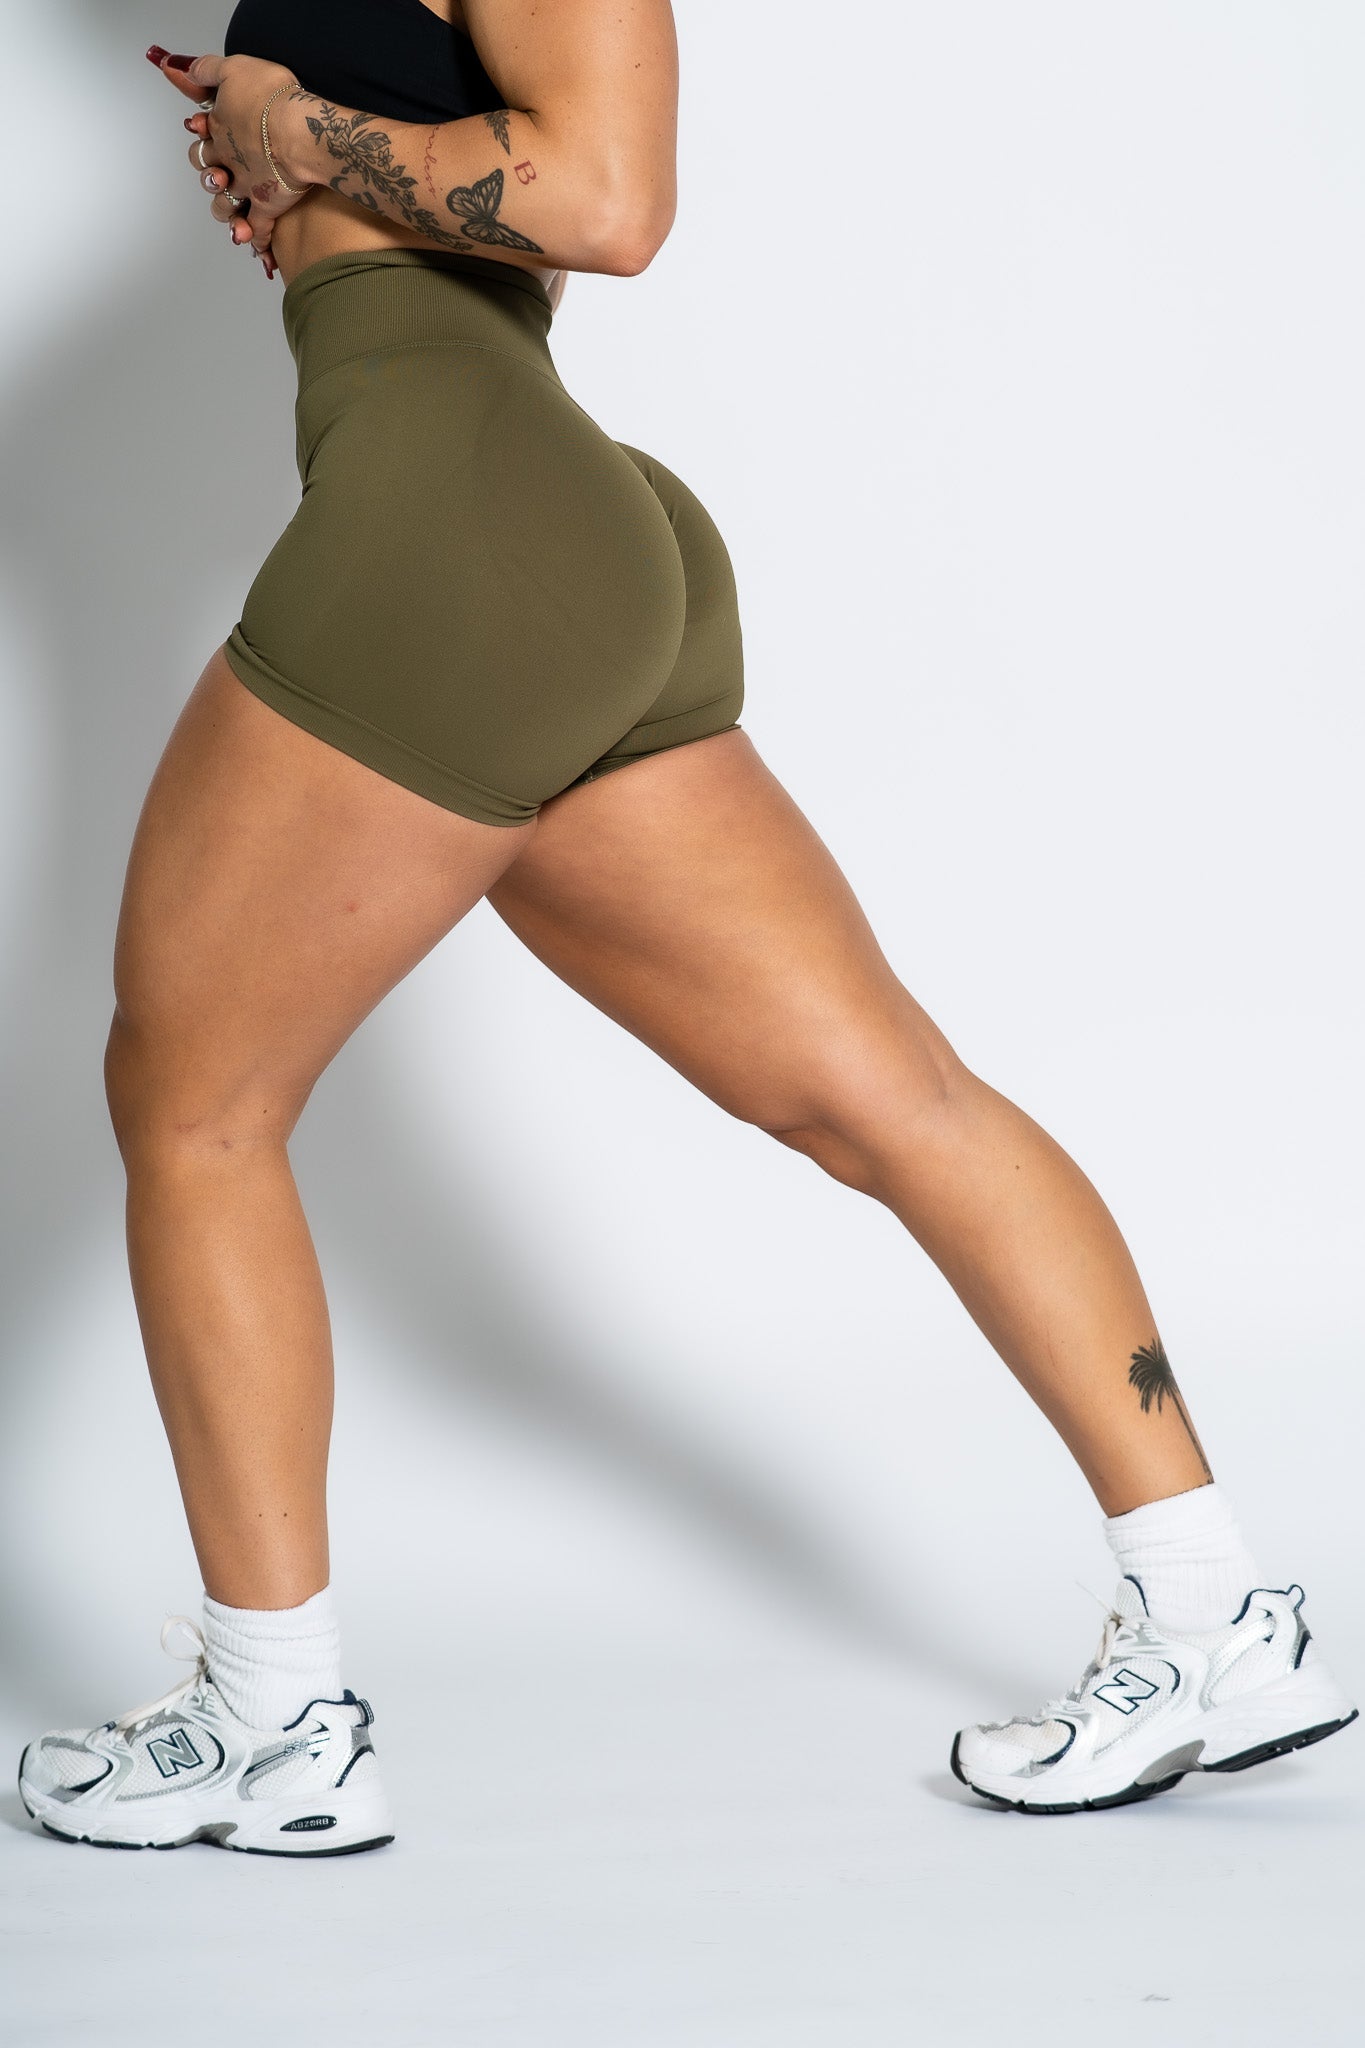 fvwitlyh Scrunch Bbl Shorts Women's 5 Inch Inseam Chino Short